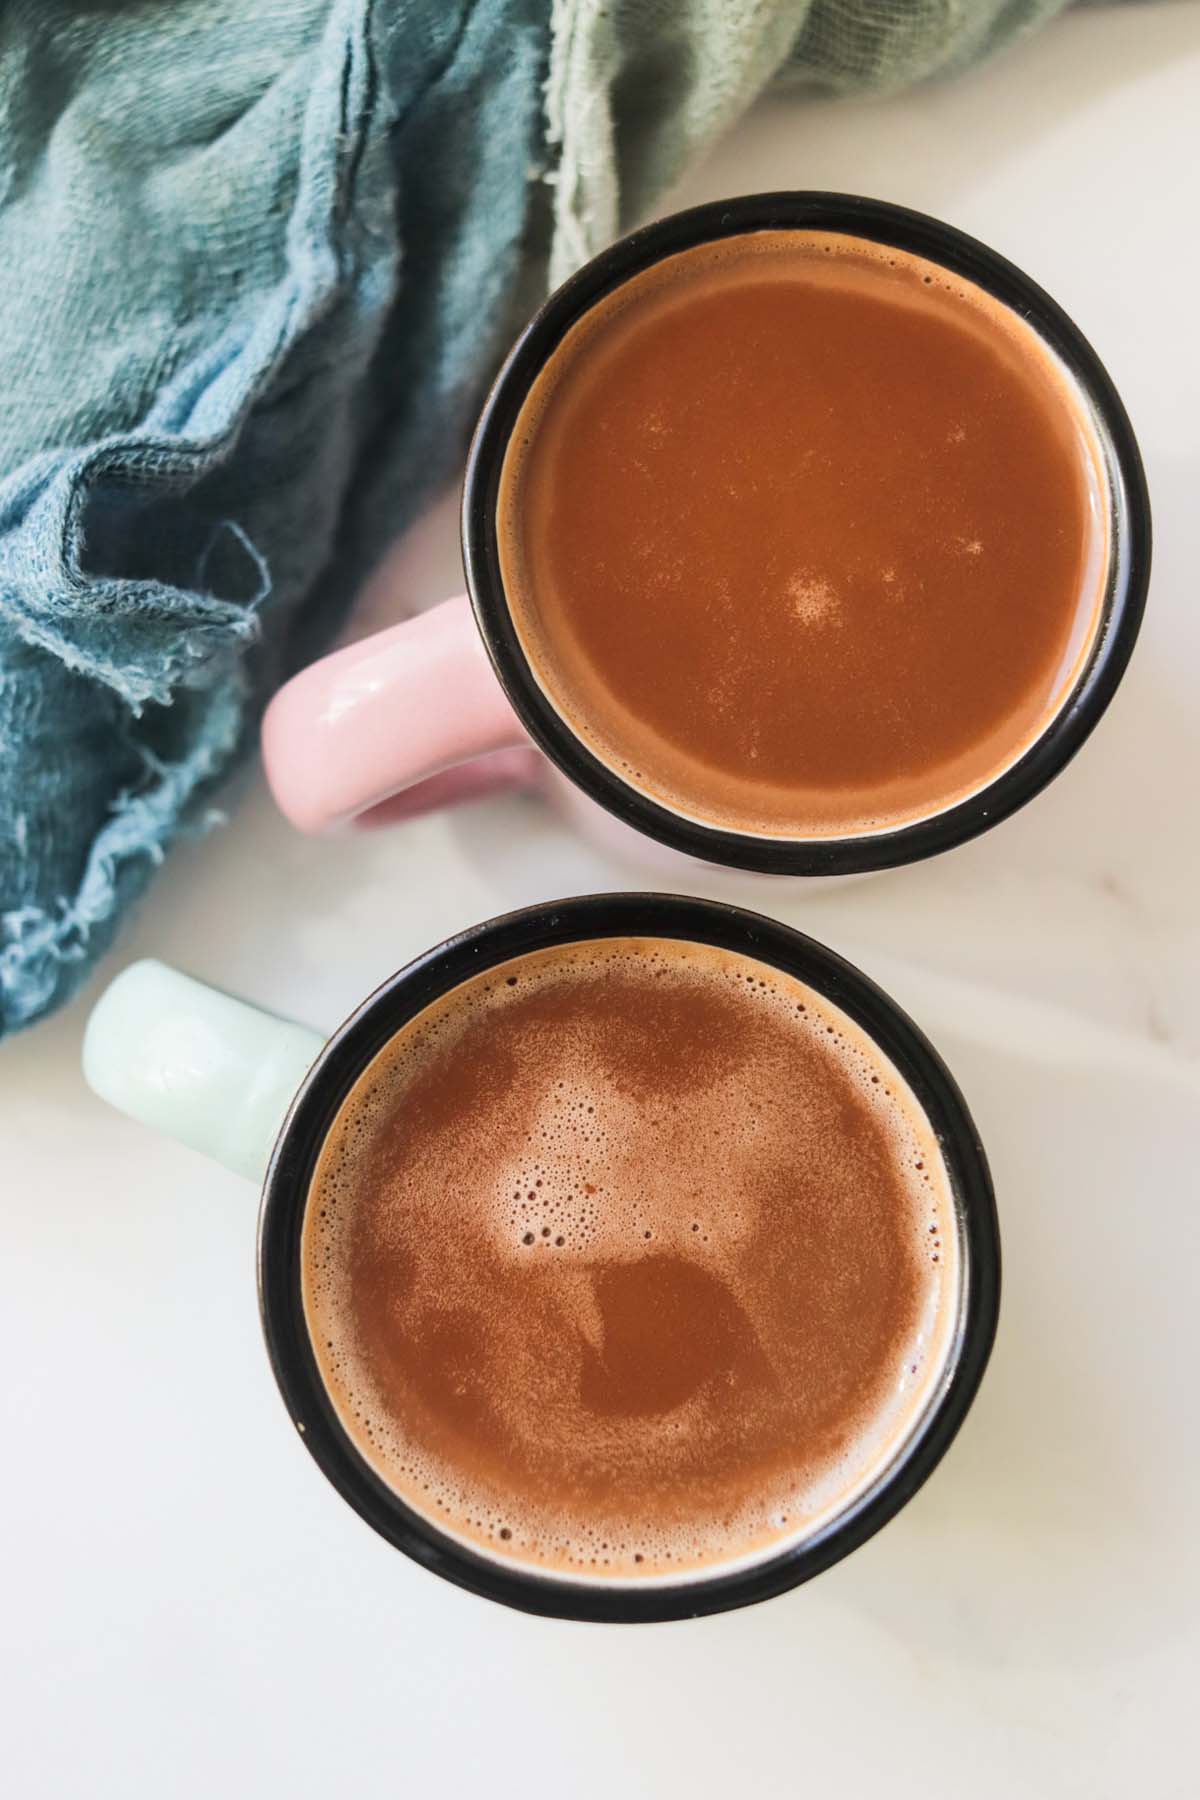 Chocolate milk in two mugs.